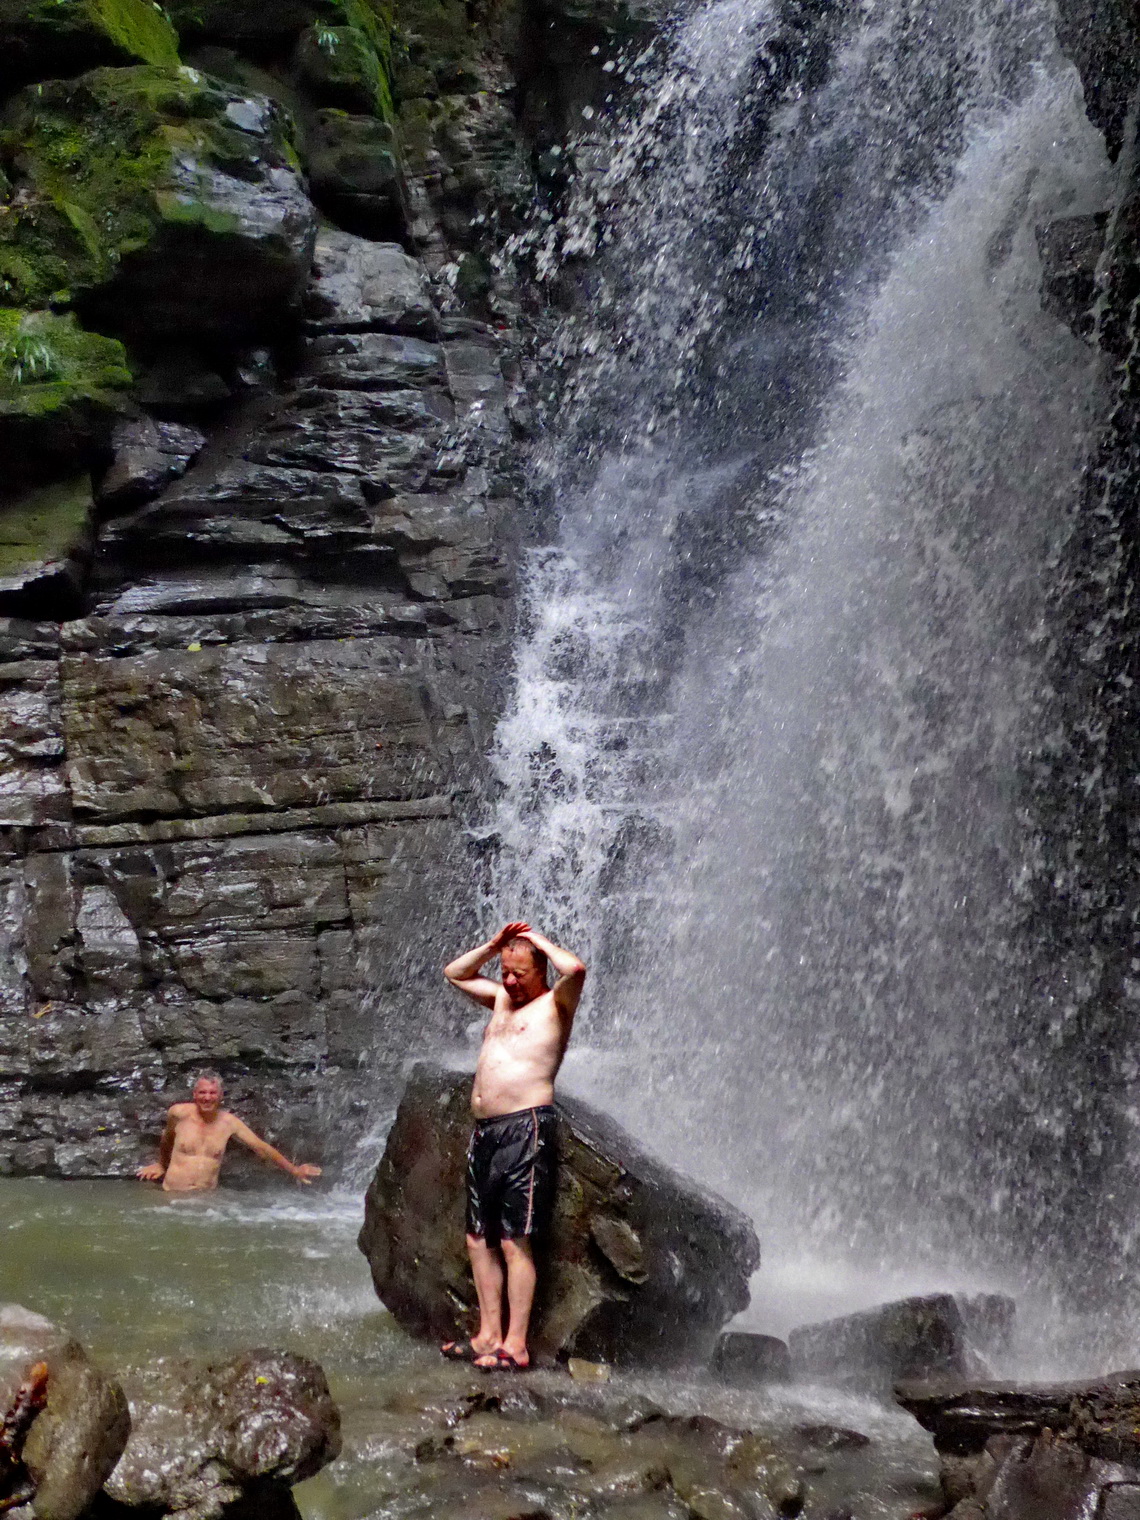 Enjoying the cold water of the waterfall Cascada de Latas